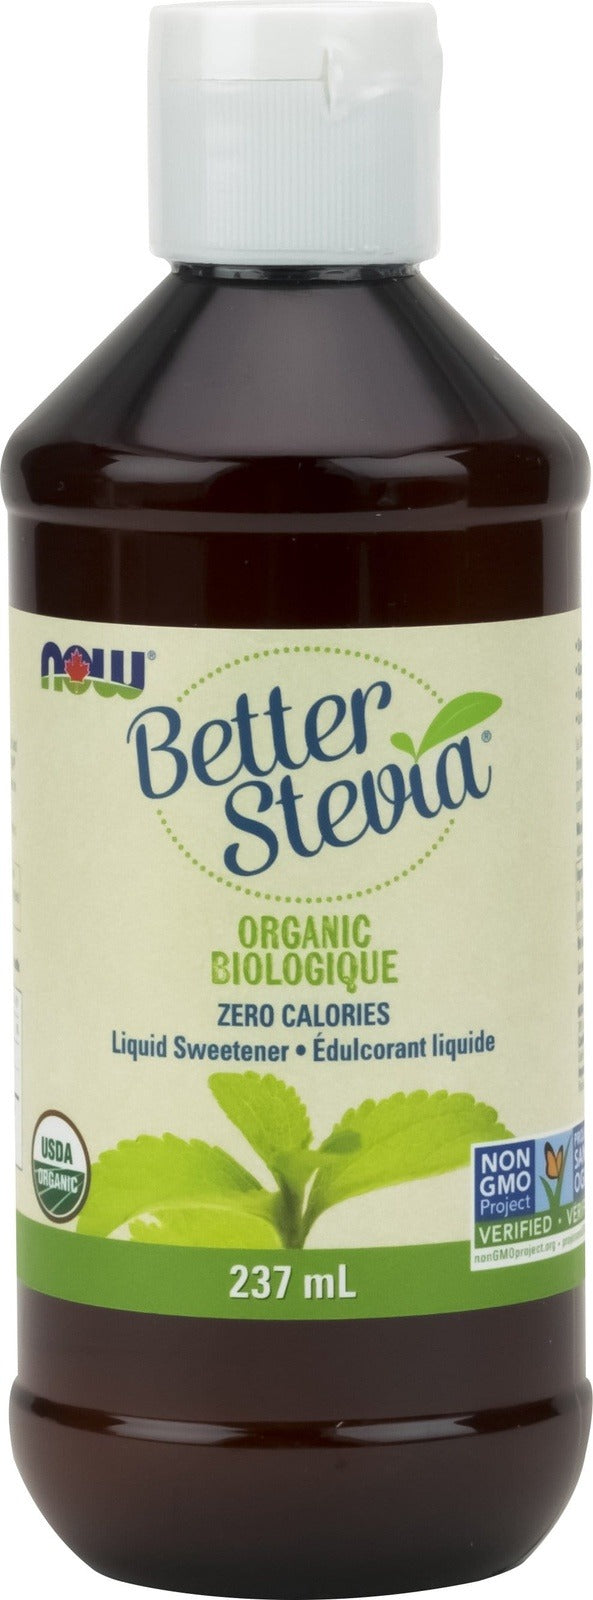 NOW Better Stevia Organic Zero-Calorie Sweetener 237 mL Image 1